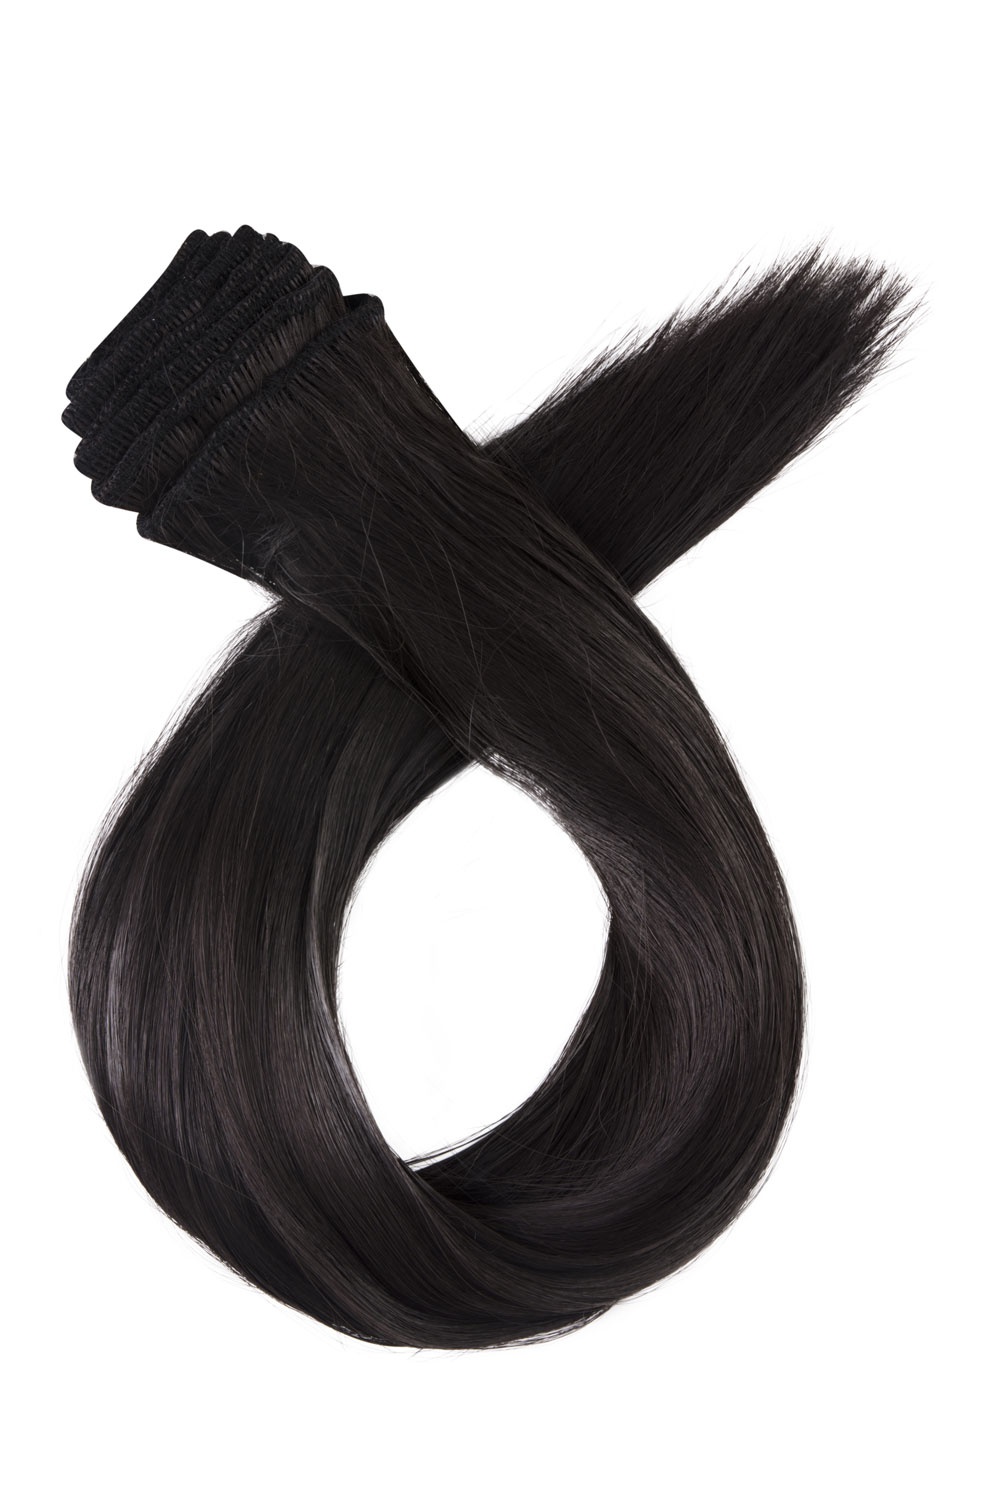 Stredne hnedé clip in vlasy, 70cm, 180g, farba 4